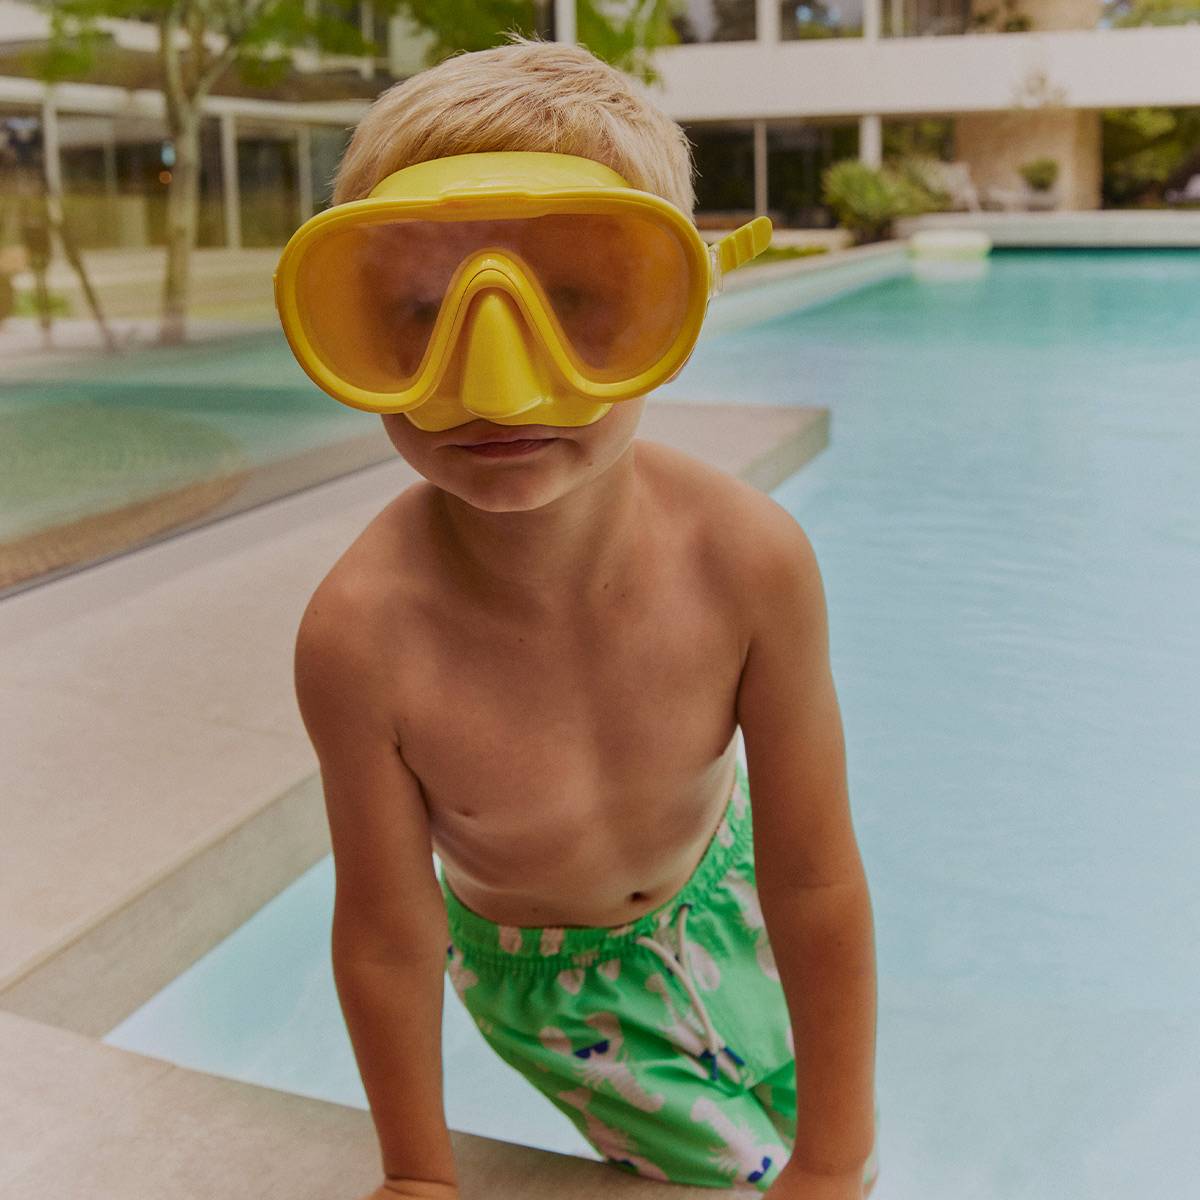 Boy wearing green swim shorts and yellow goggles 